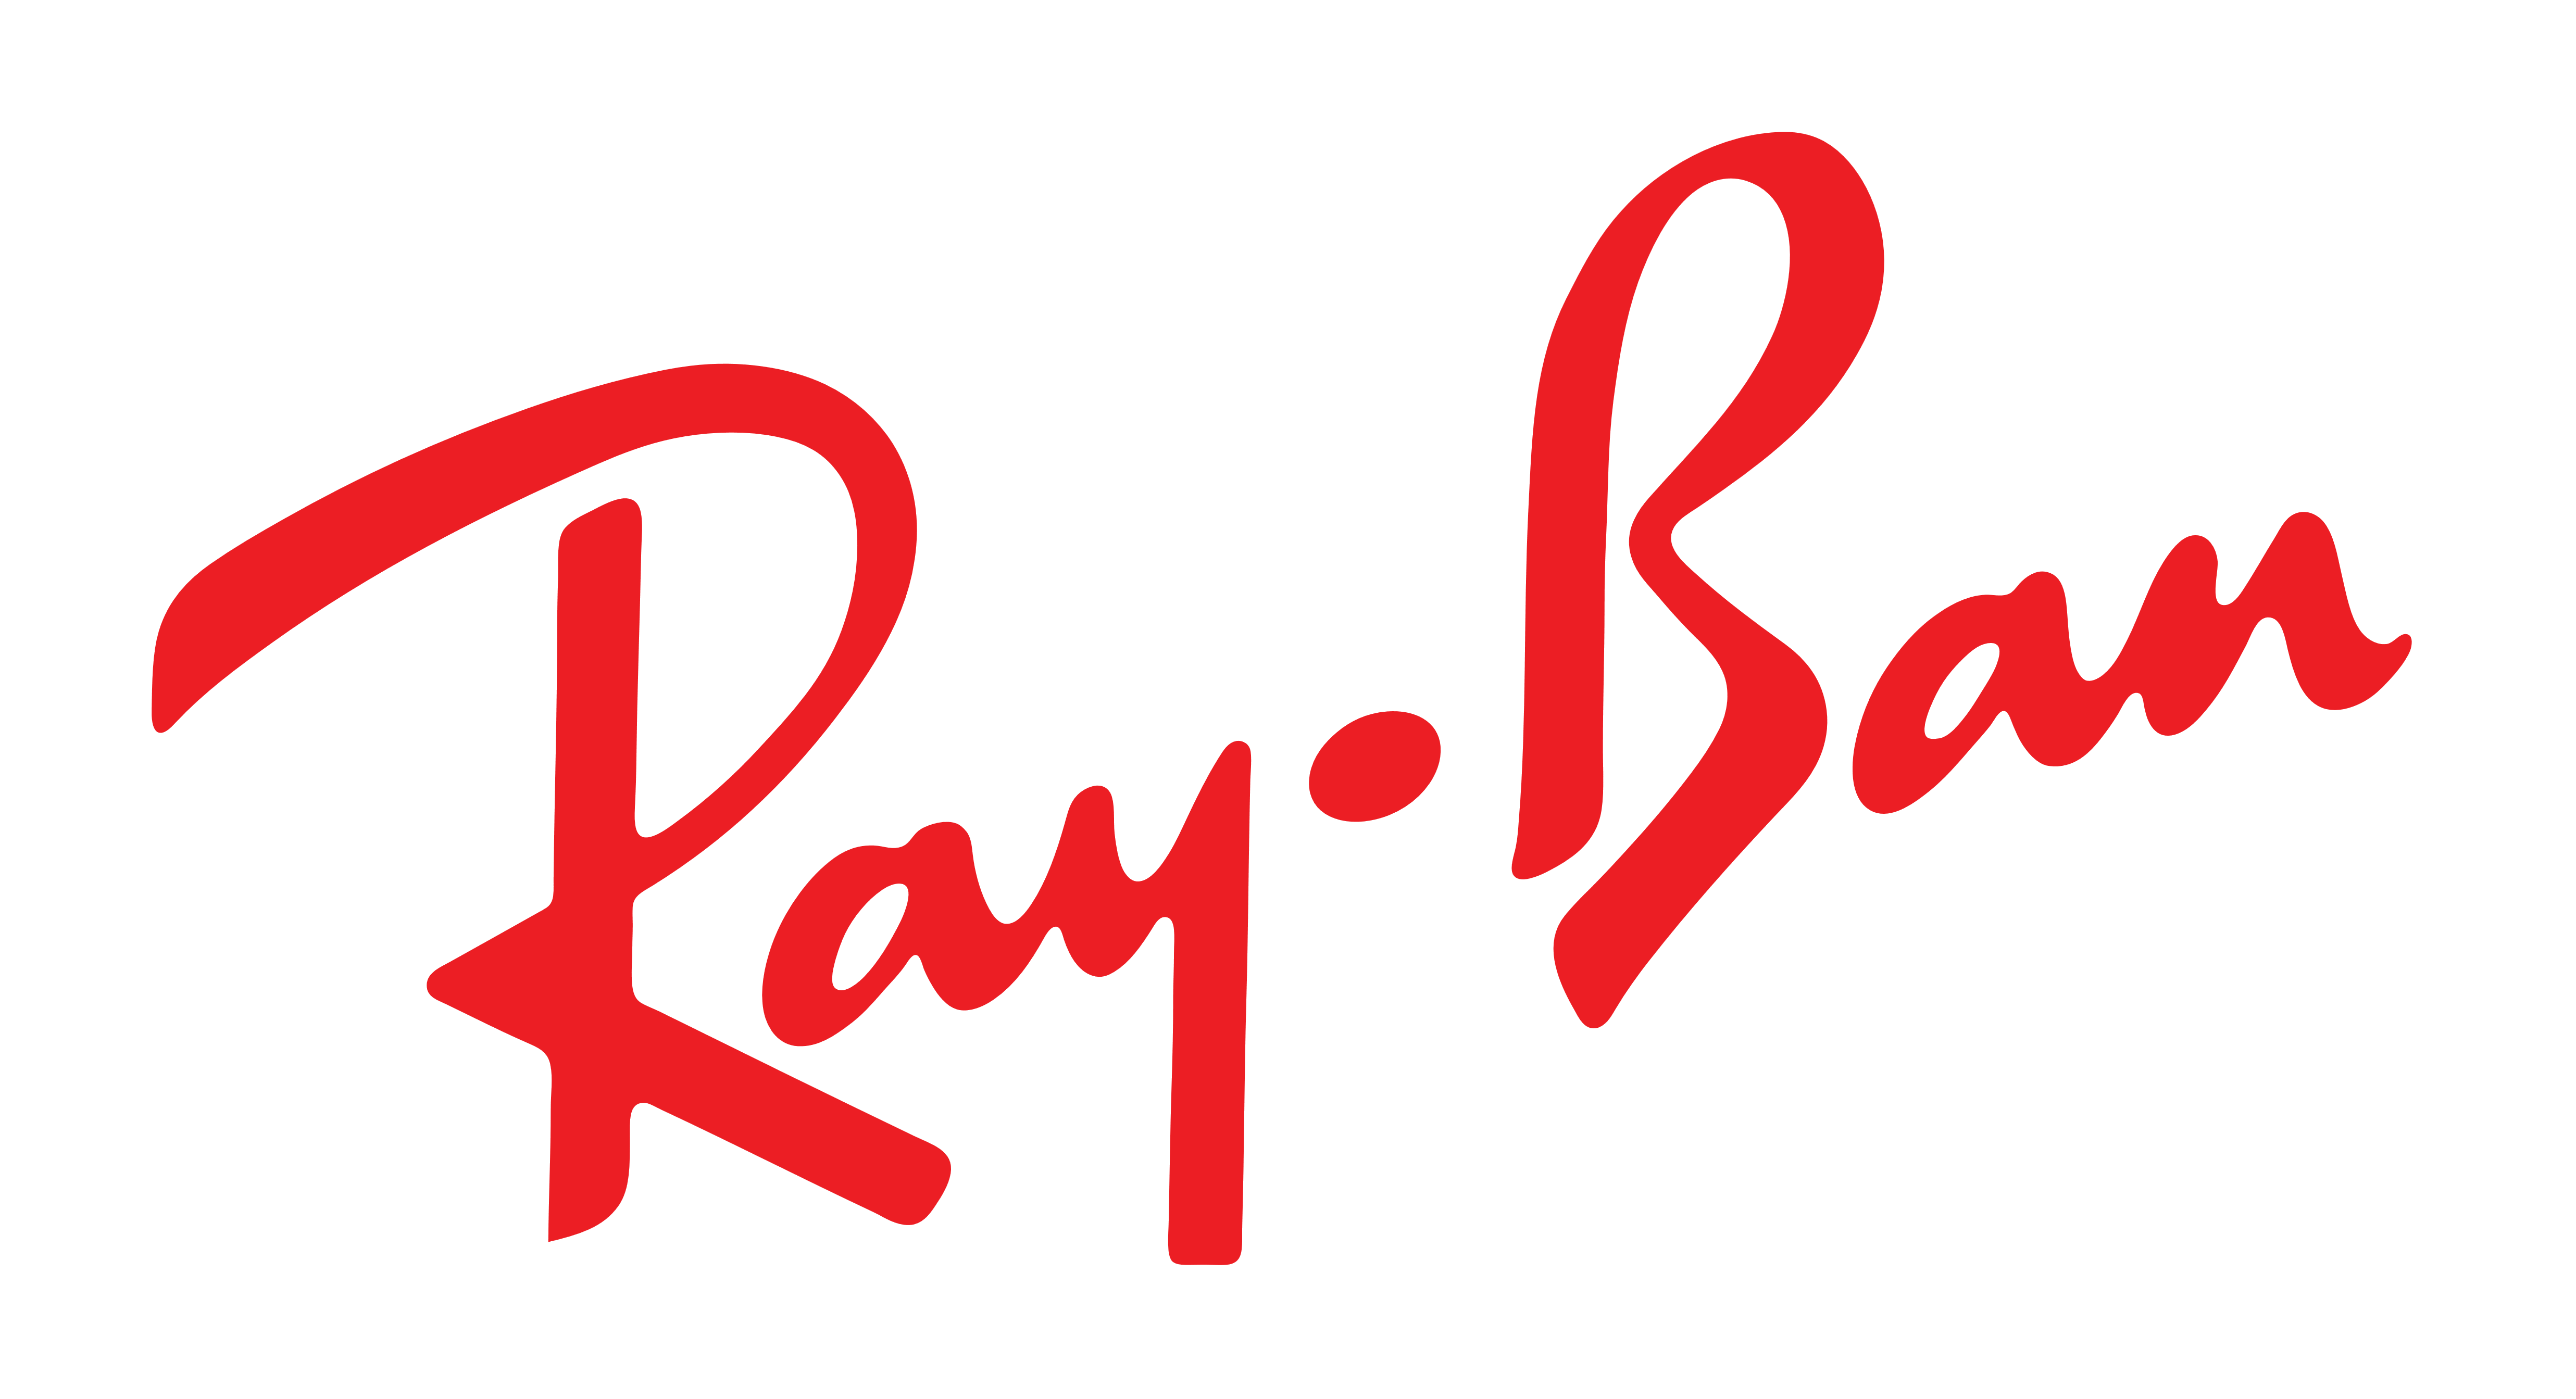 Whiye and Red a Logo - Ray-Ban – Logos Download